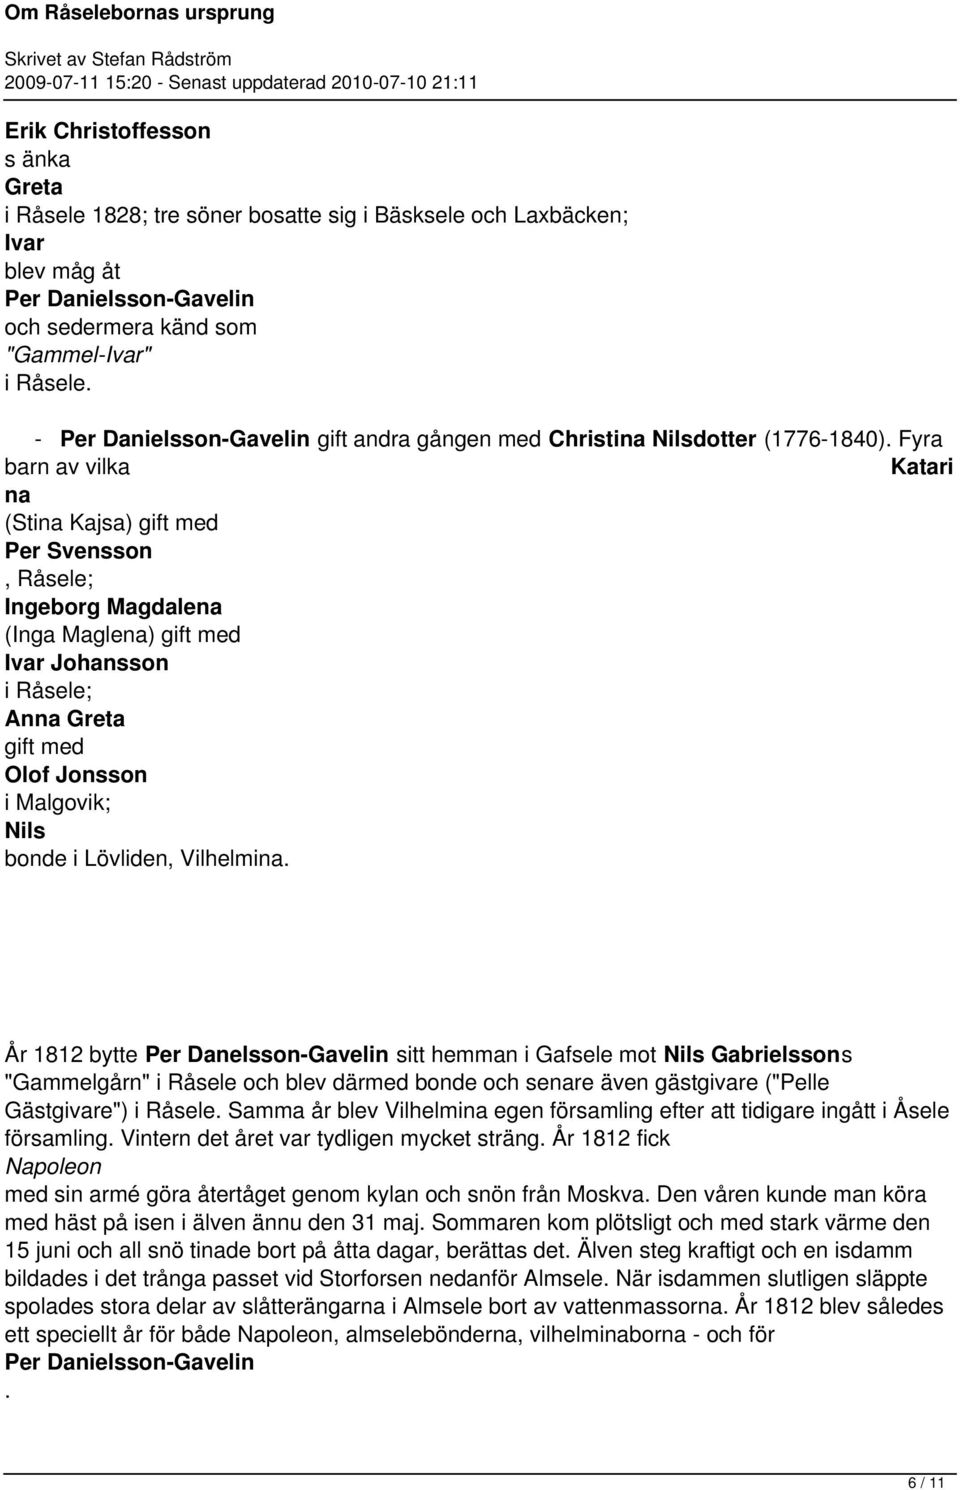 Anna Greta gift med Olof Jonsson i Malgovik; Nils bonde i Lövliden, Vilhelmina År 1812 bytte Per Danelsson-Gavelin sitt hemman i Gafsele mot Nils Gabrielssons "Gammelgårn" i Råsele blev därmed bonde